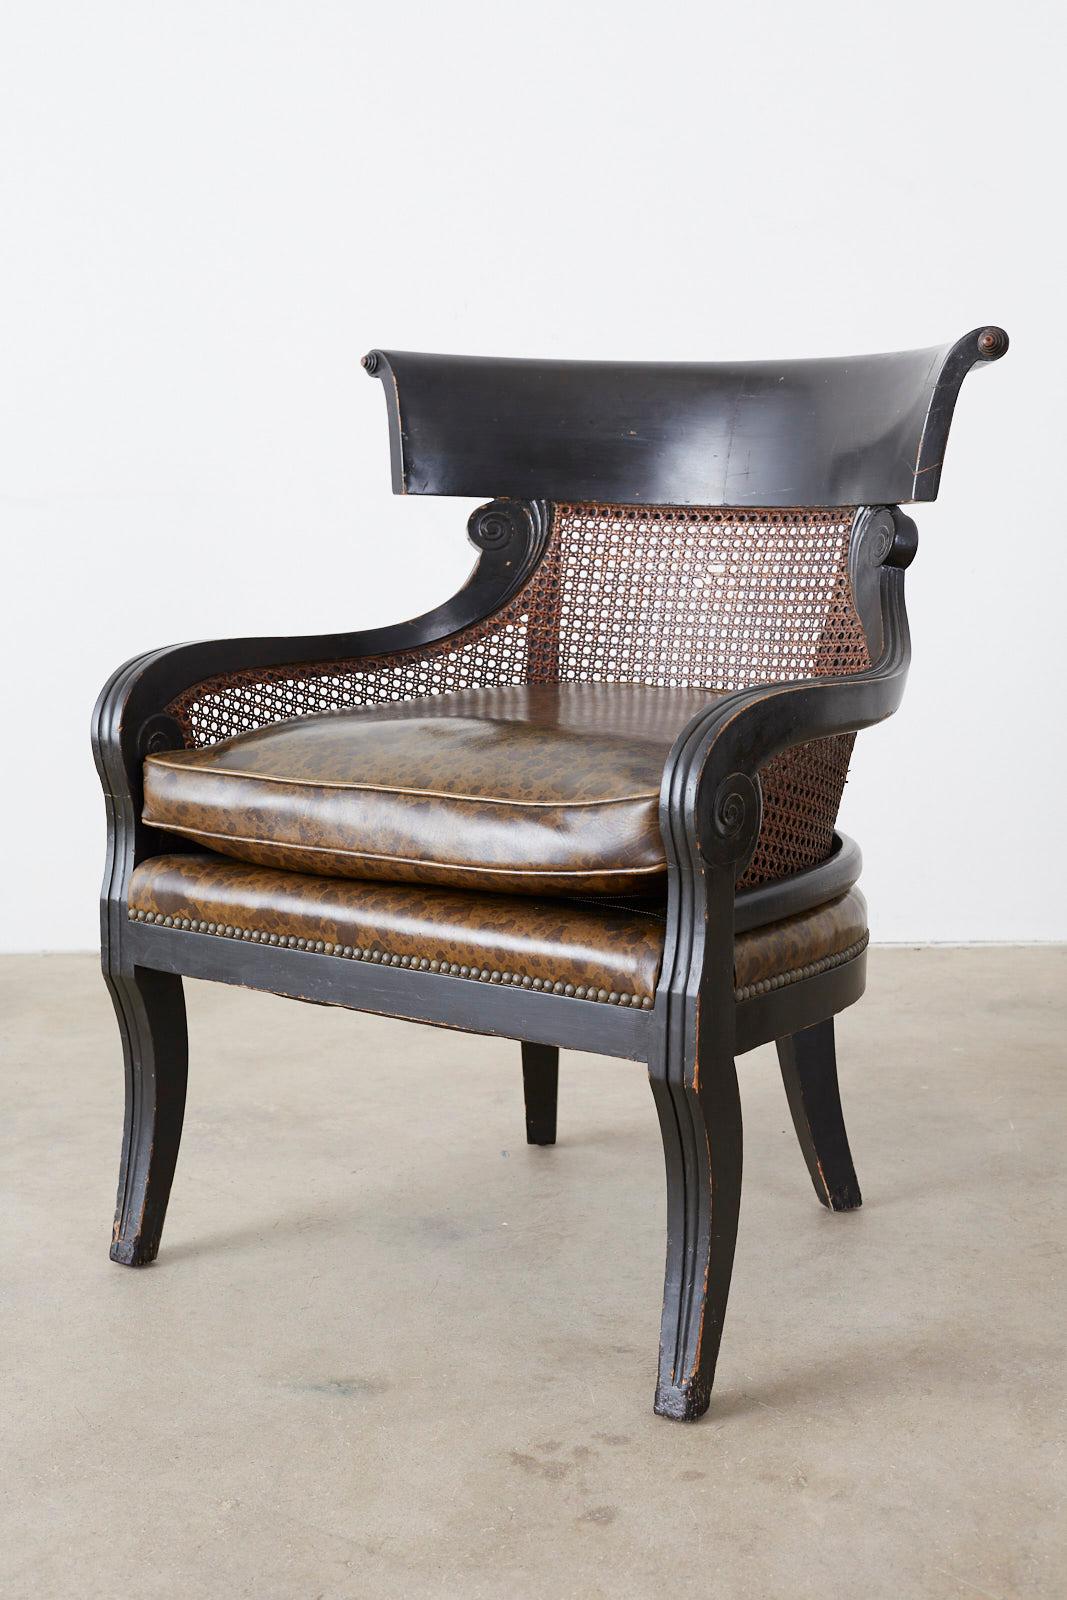 Hand-Crafted Pair of English Regency Style Ebonized Klismos Chairs